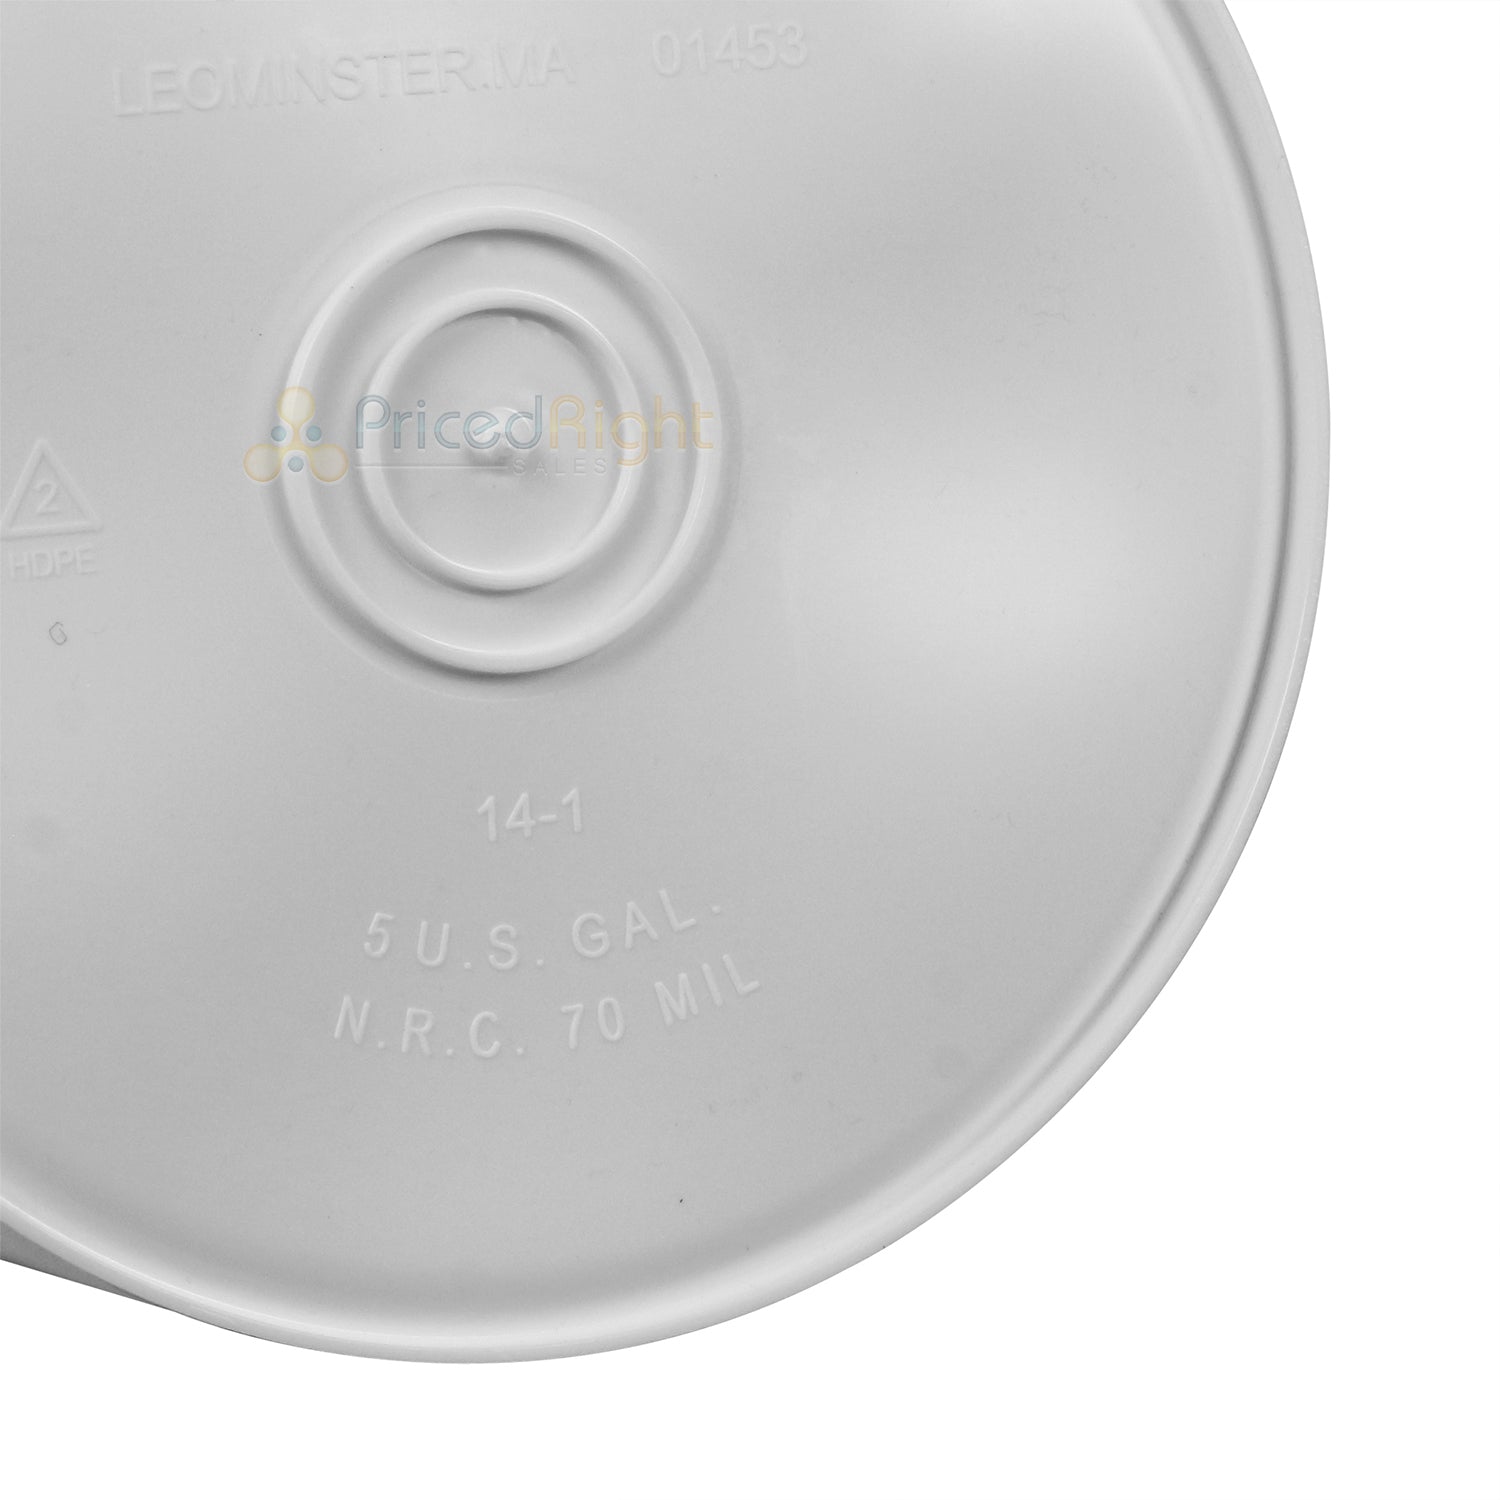 Big BBQ Company 5 Gallon Plastic Storage Bucket 12-Inch Diameter With Handle